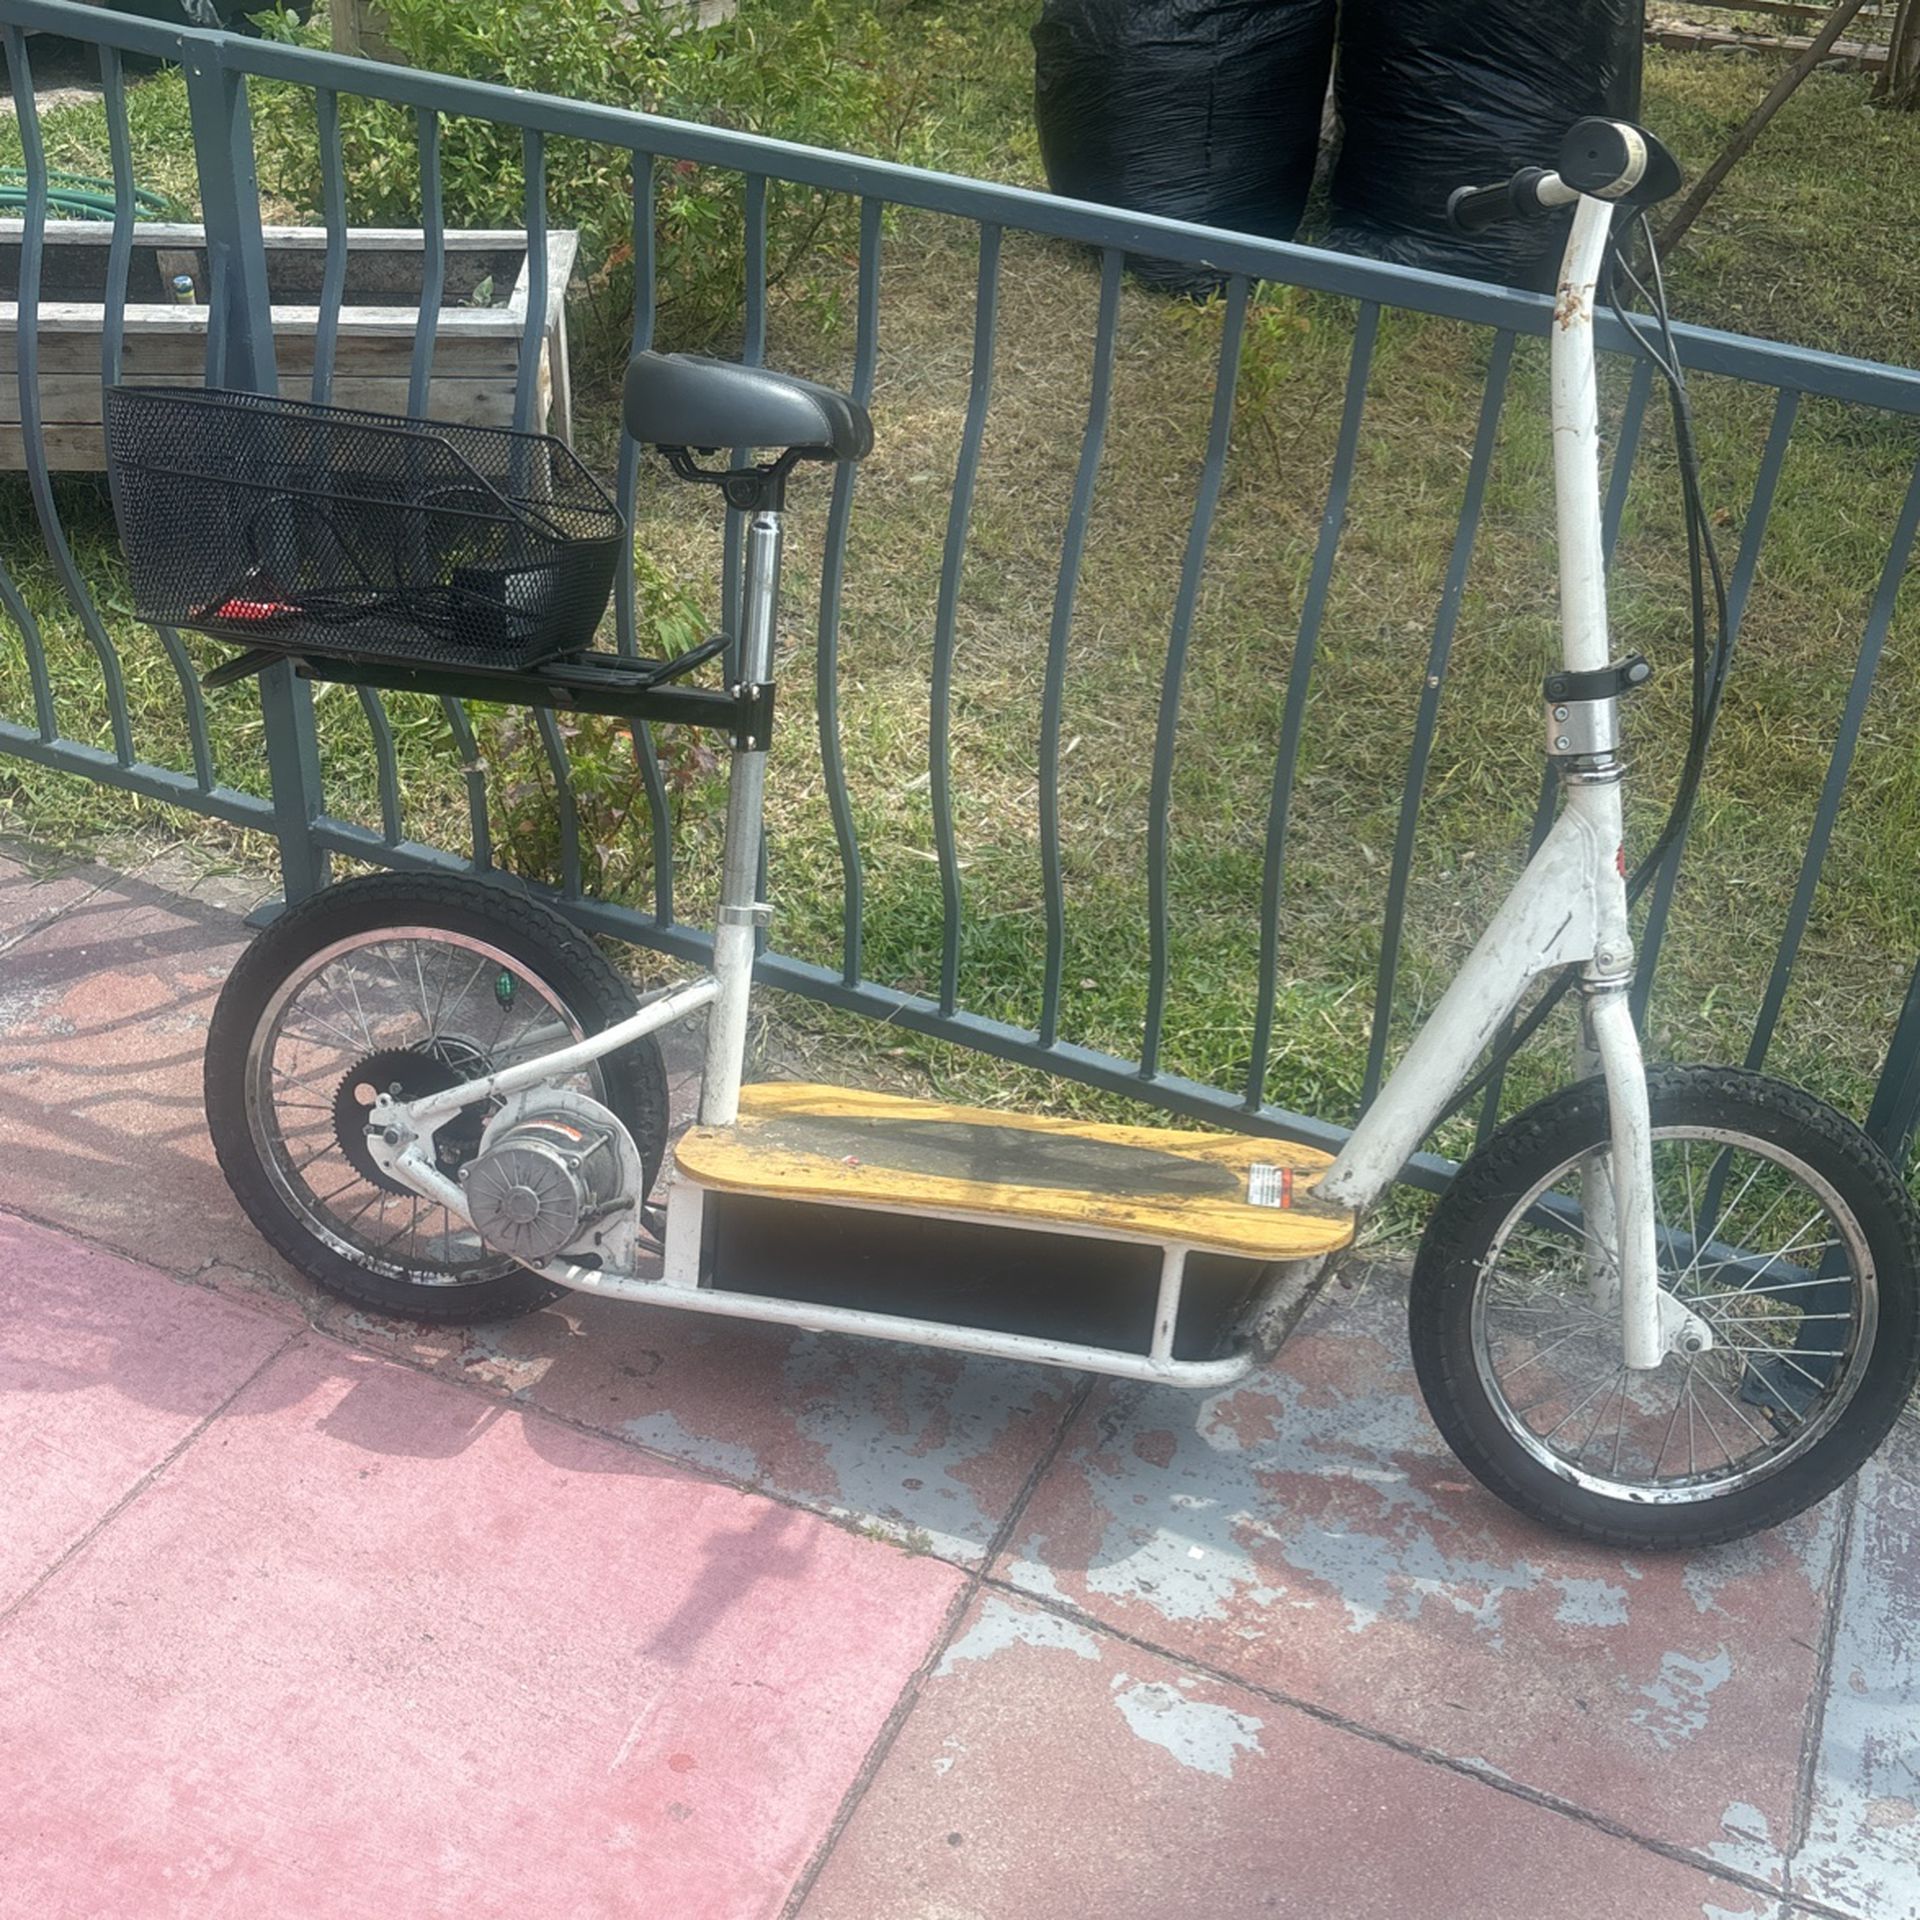 Scooter/bike